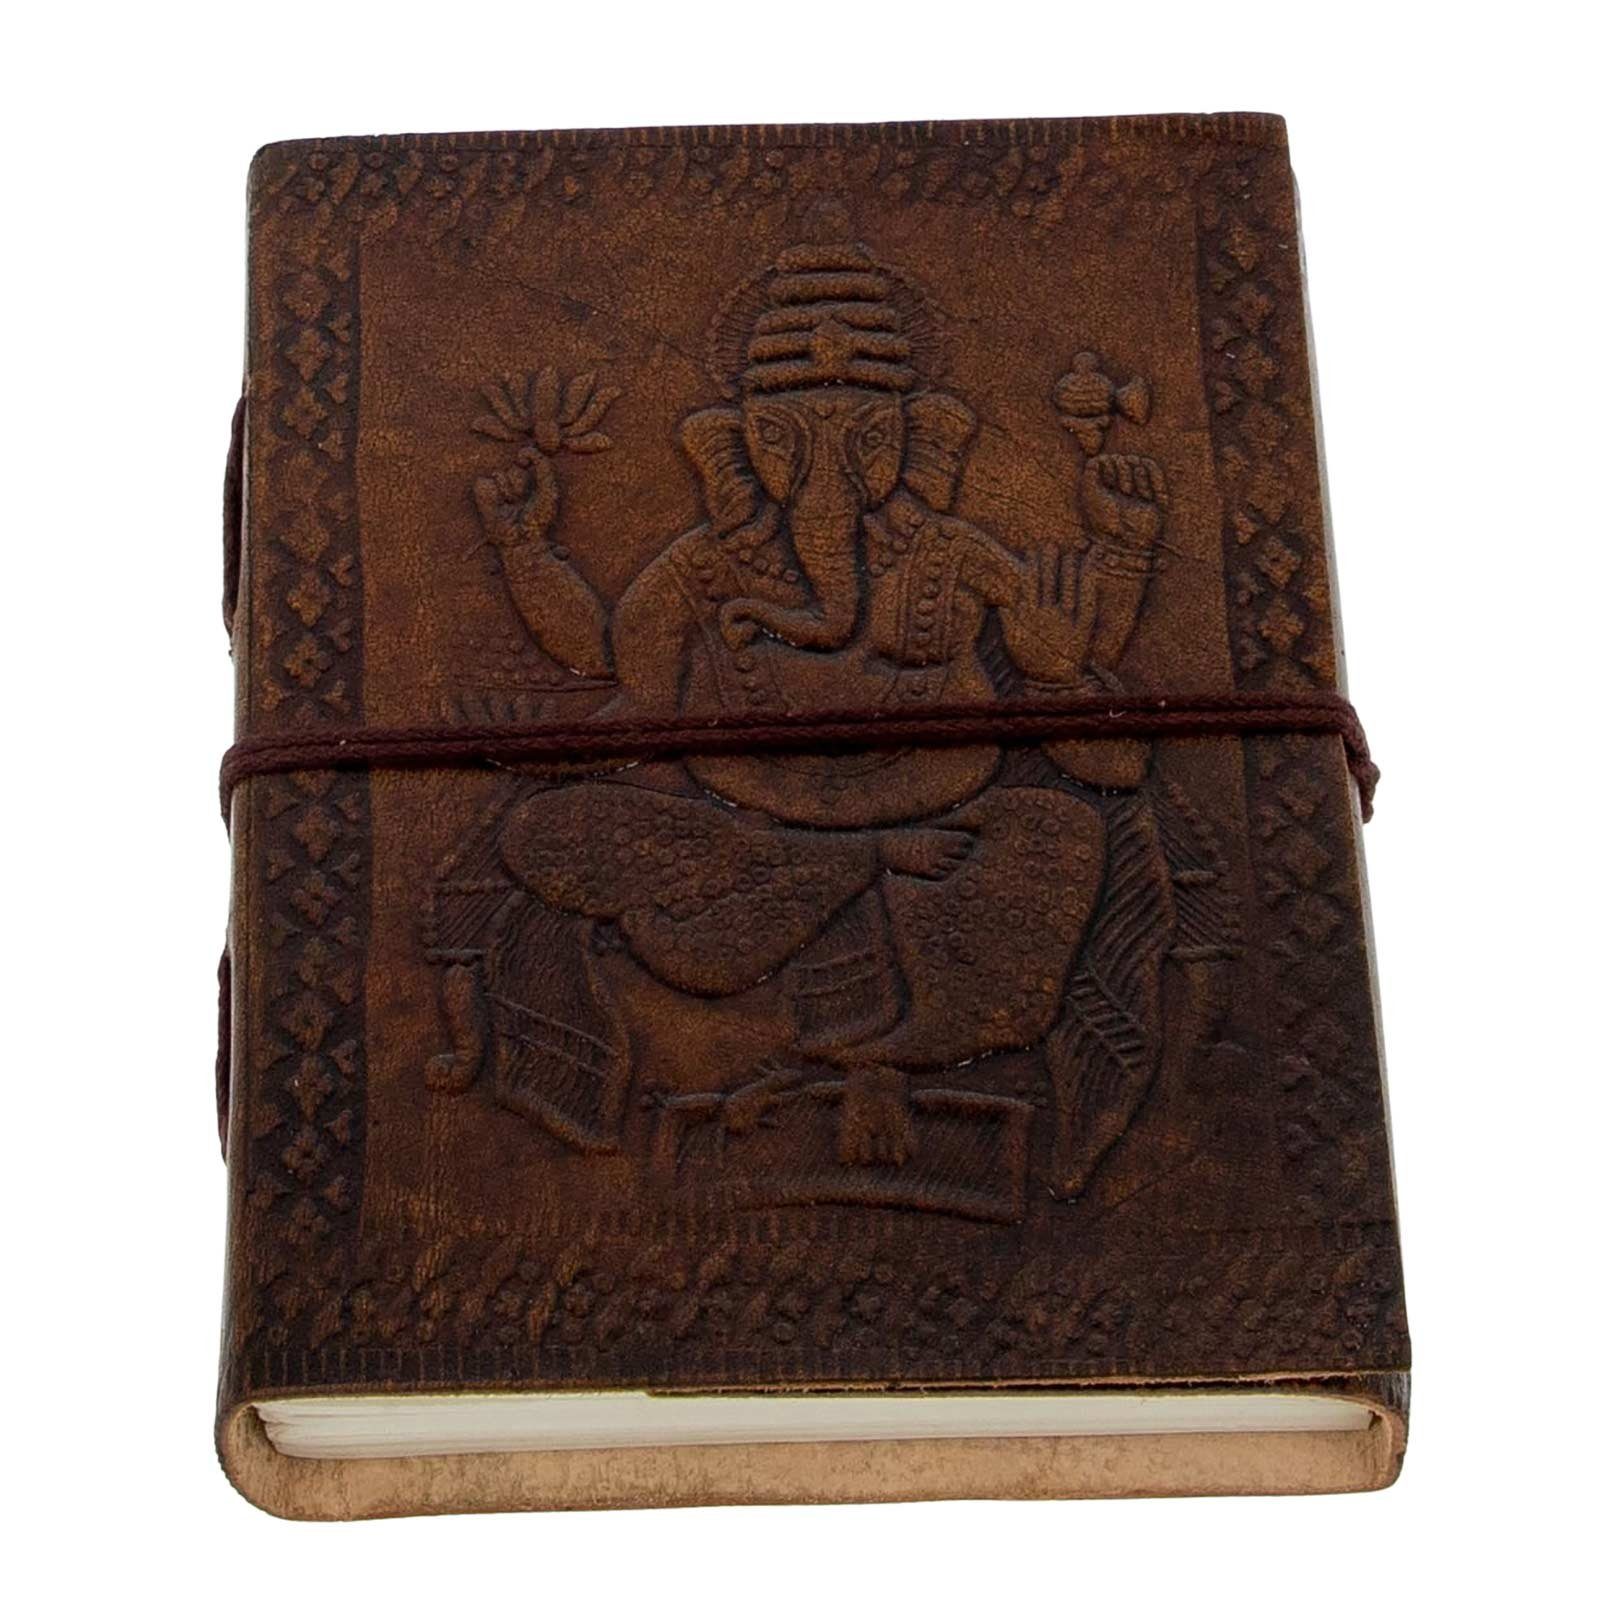 KUNST UND Tagebuch Lord Notizbuch Leder Tagebuch MAGIE 11,5x15cm handgefertigt Ganesha